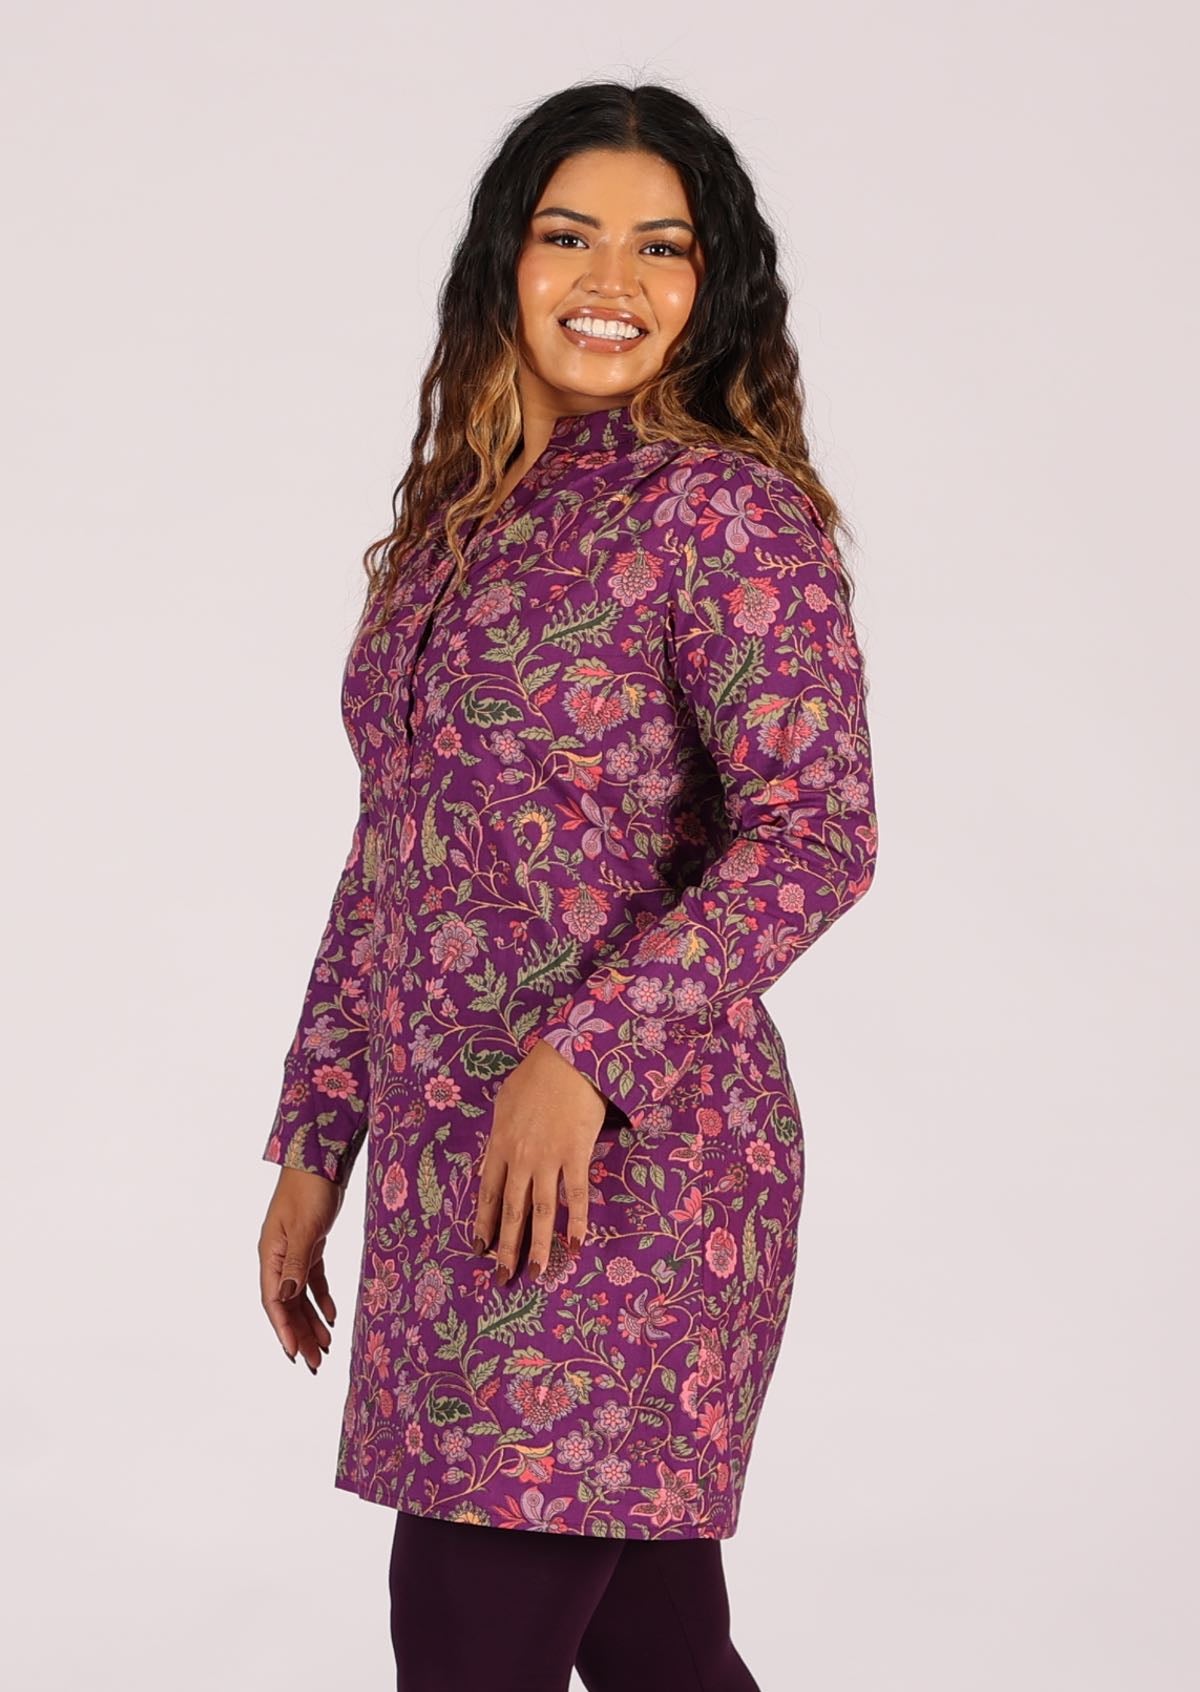 100% cotton pink and purple floral print shirt dress